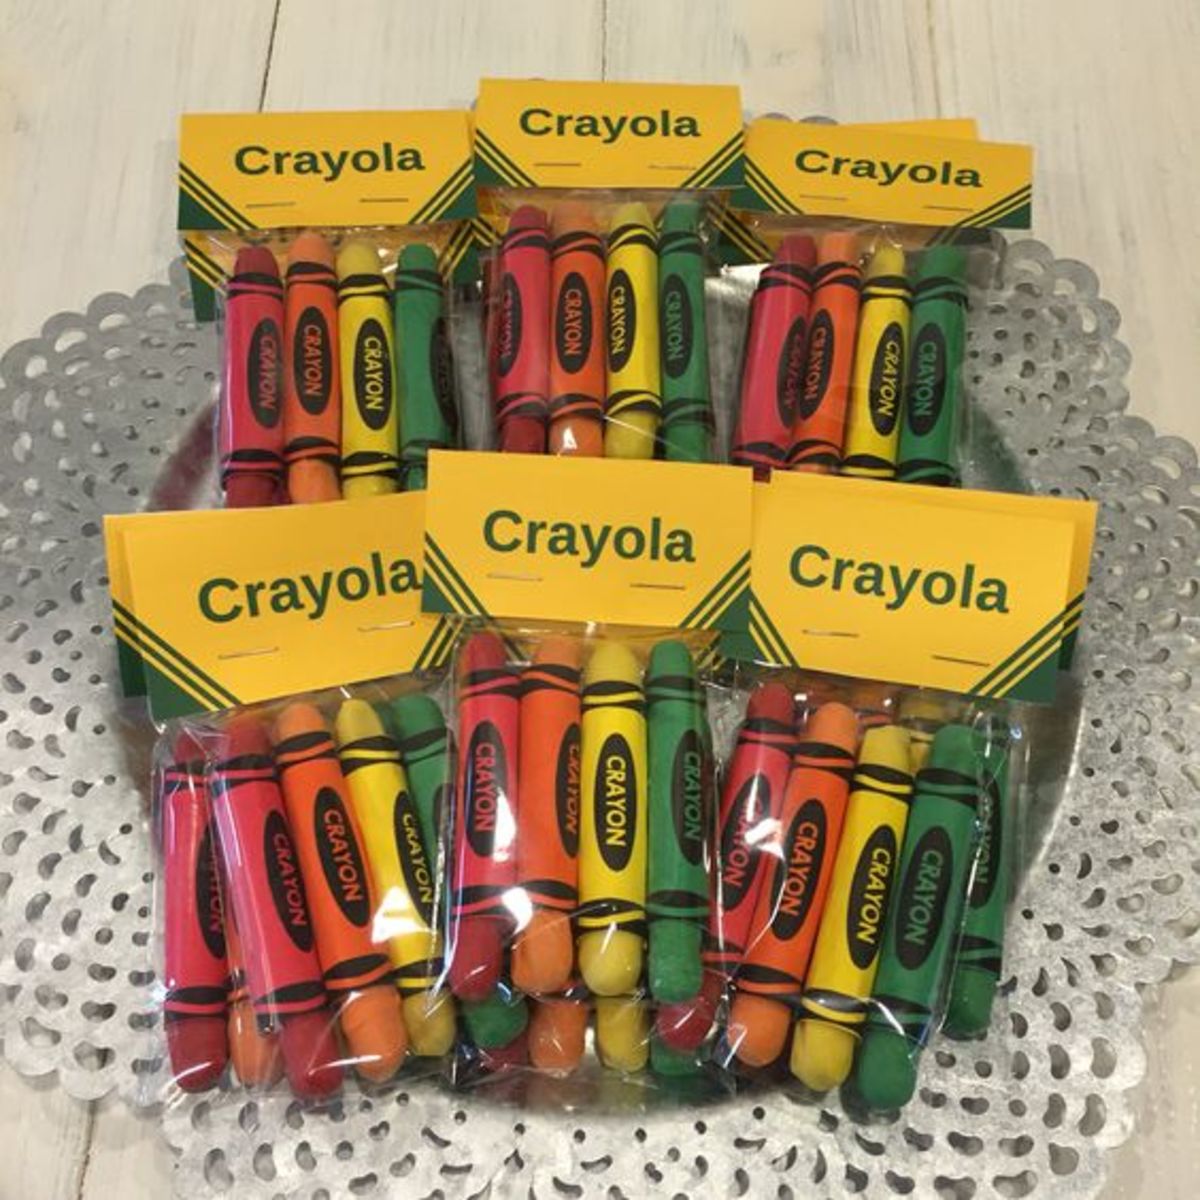 crayon-party-ideas